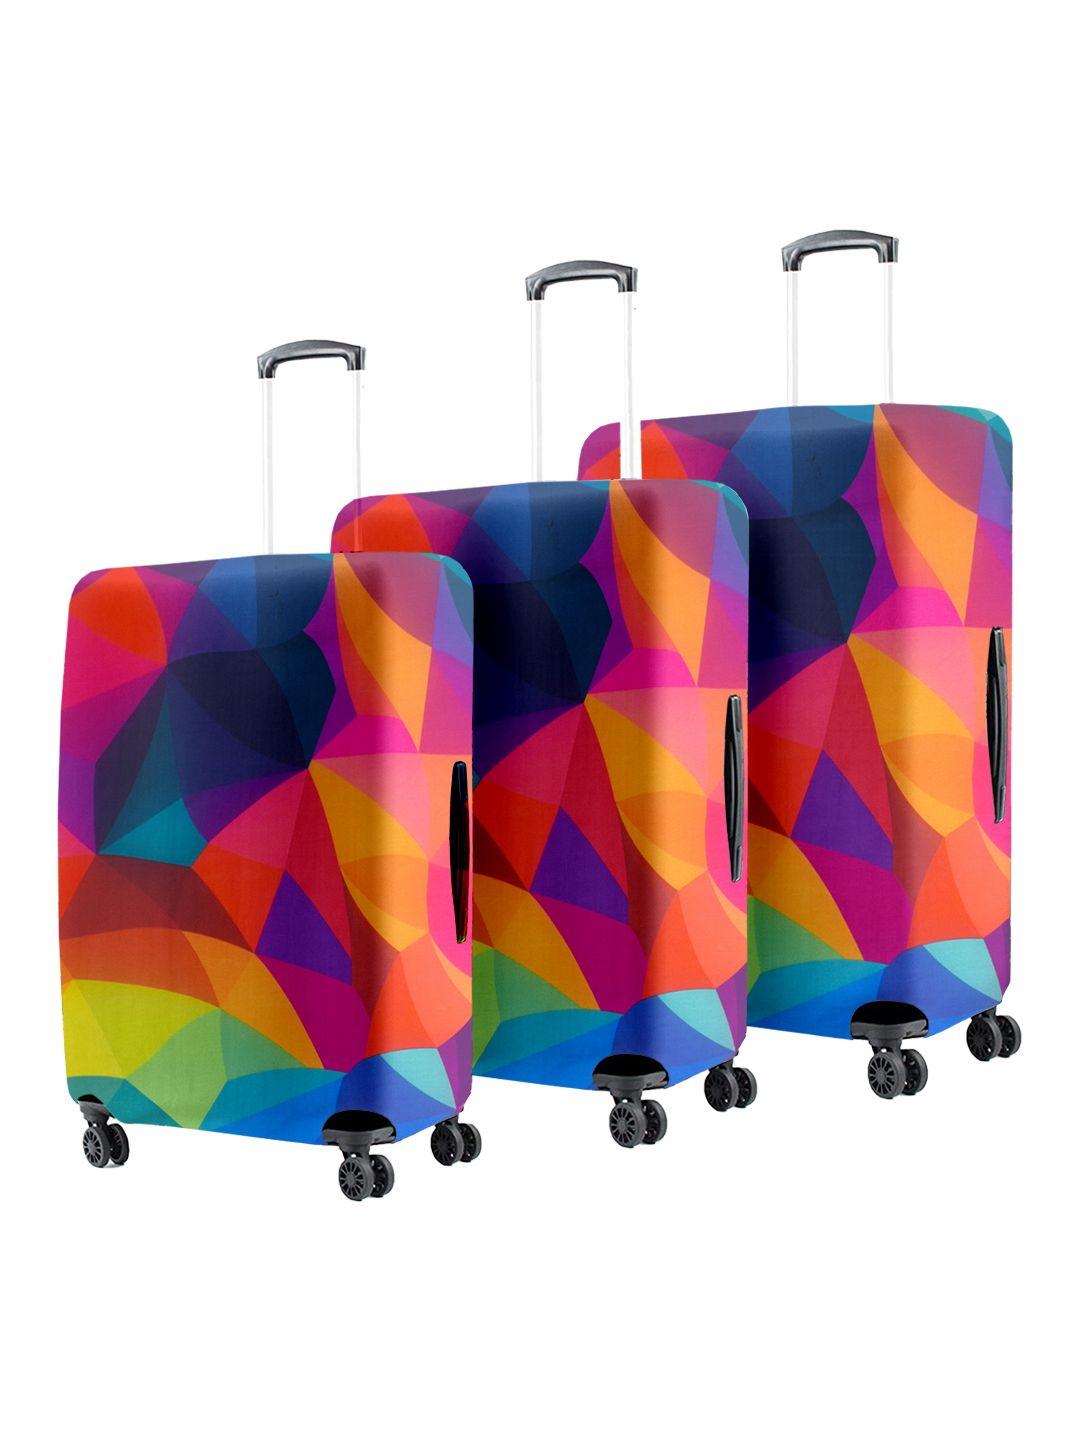 cortina set of 3 geometric printed protective trolley bag covers